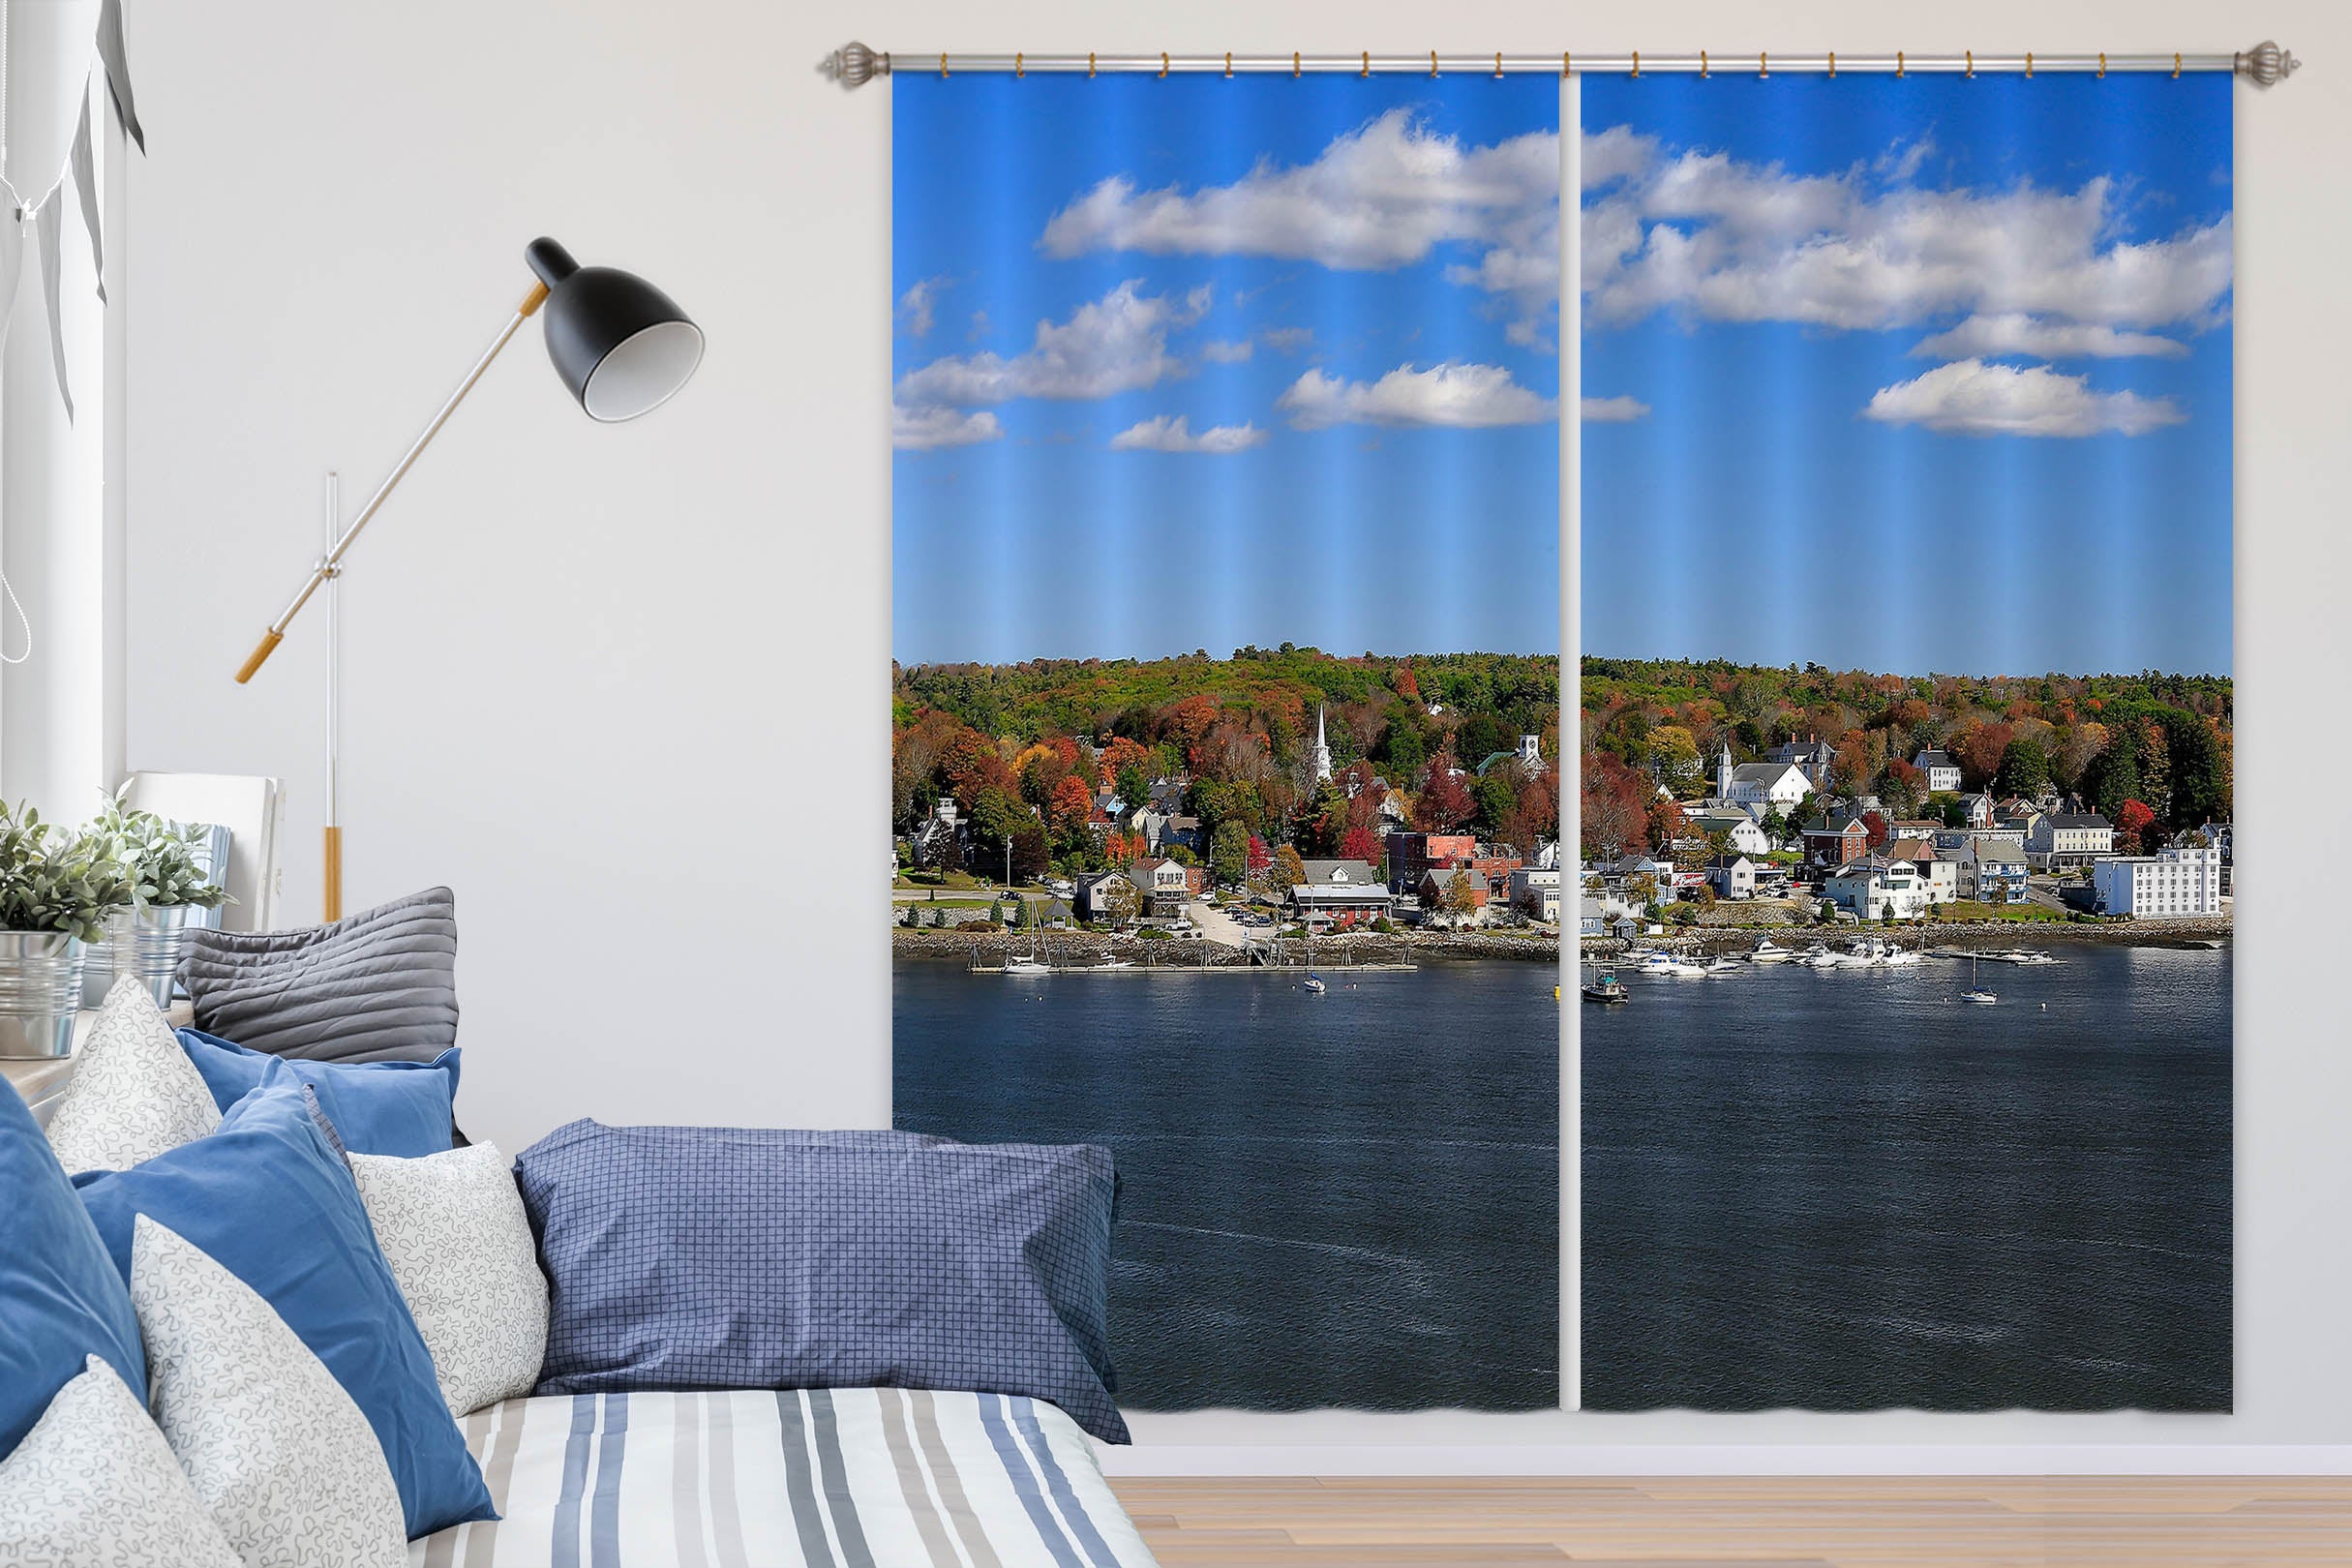 3D Seaside House 61211 Kathy Barefield Curtain Curtains Drapes